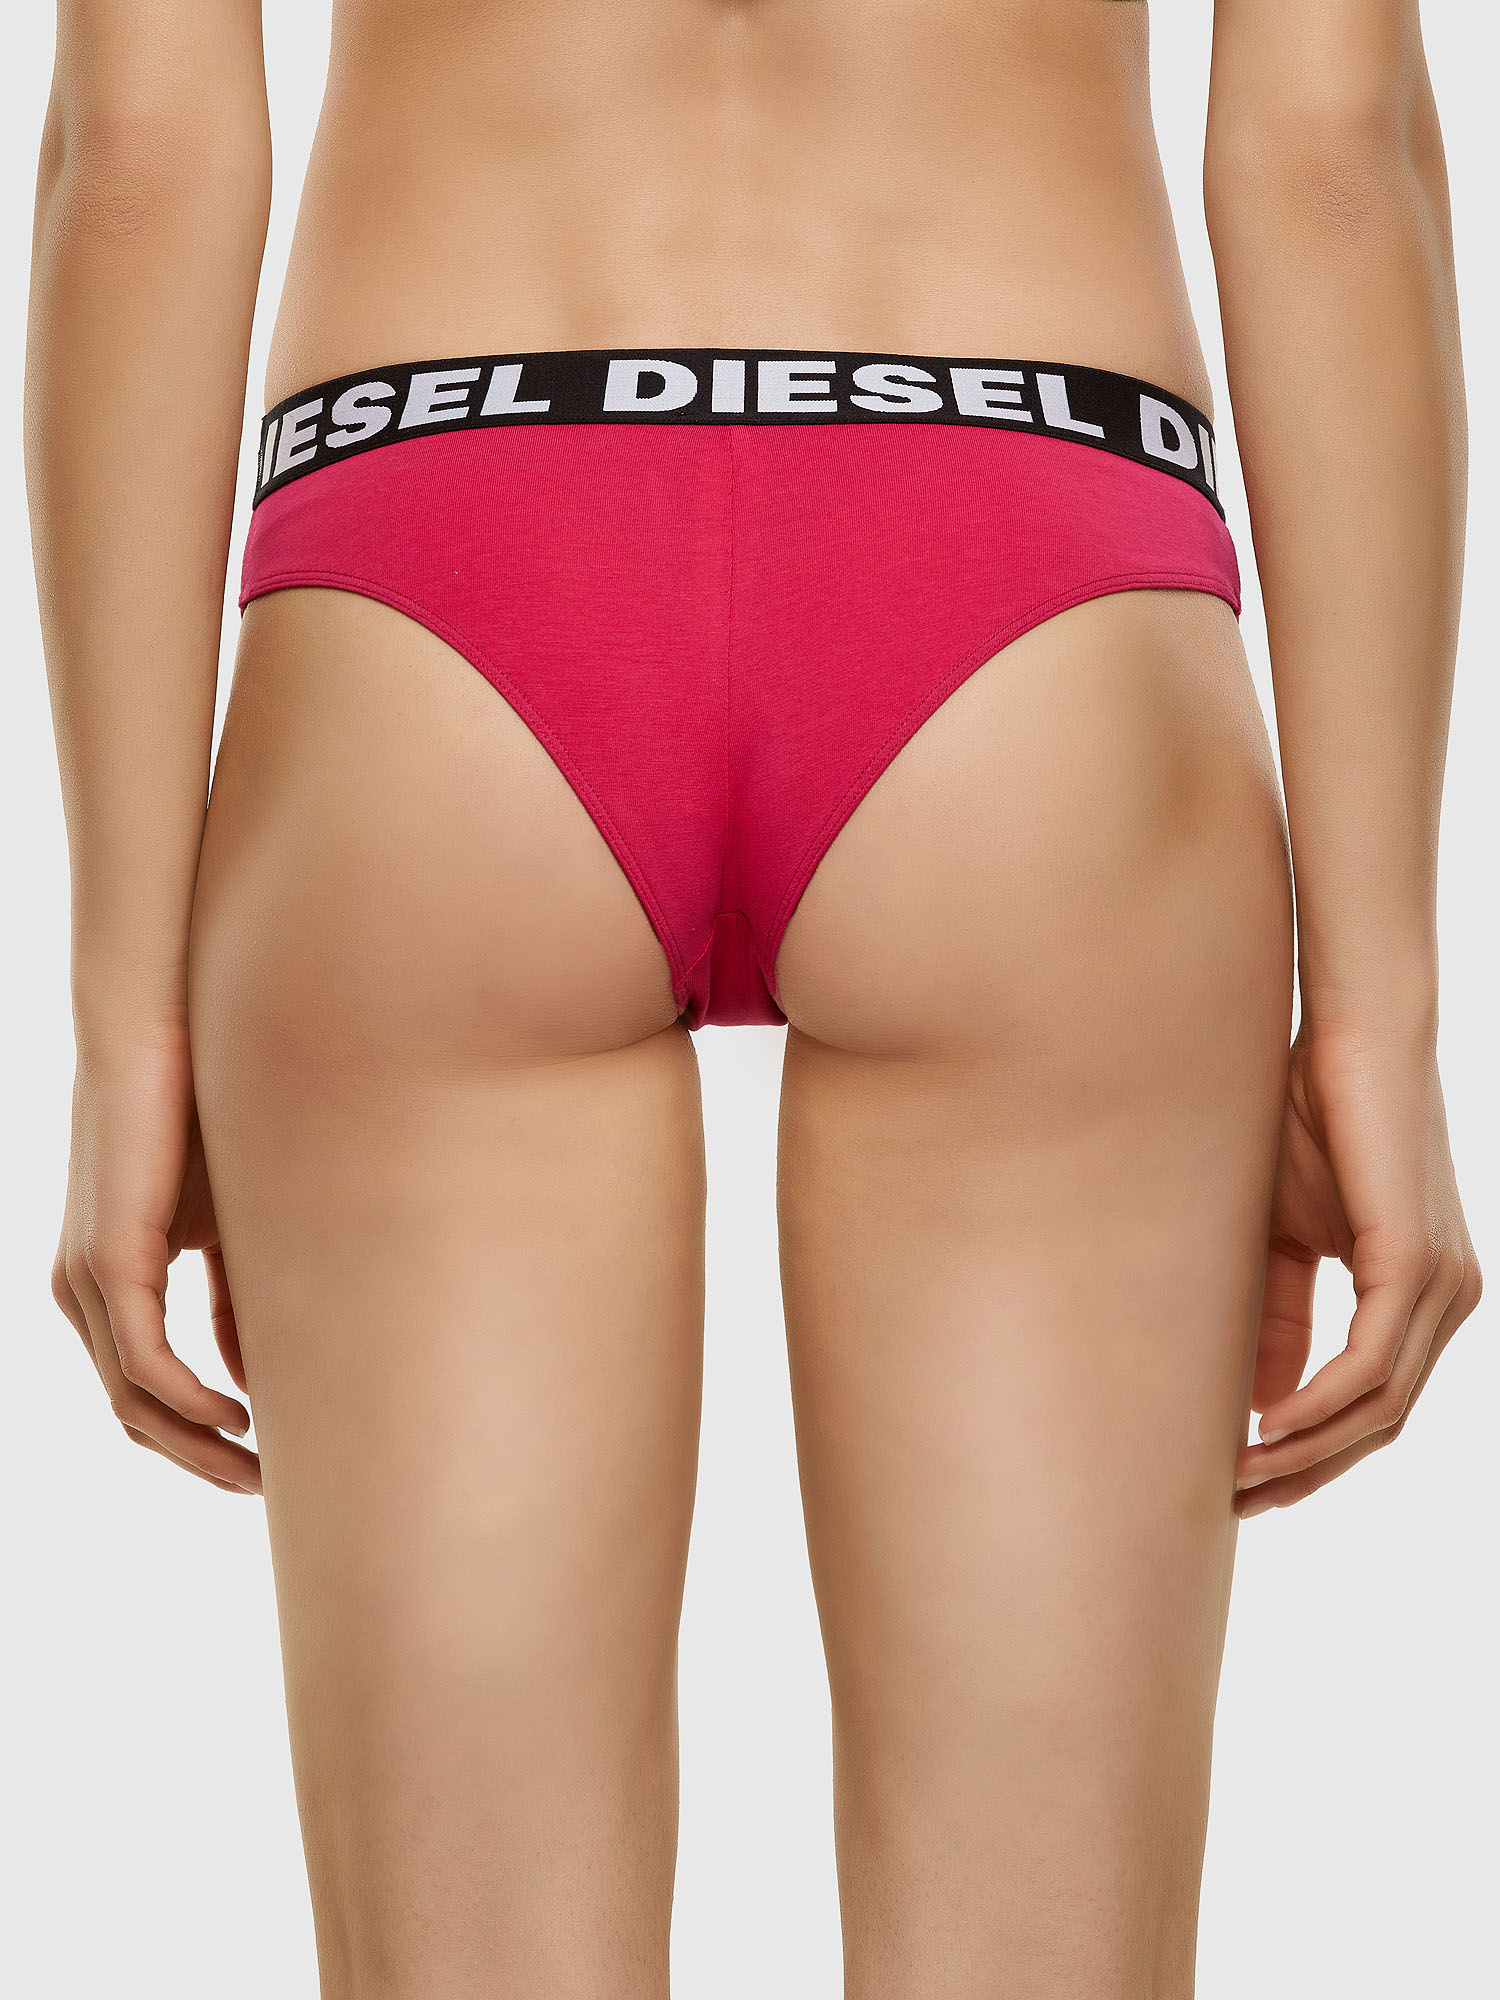 Diesel - UFPN-ALLY, Hot pink - Image 2